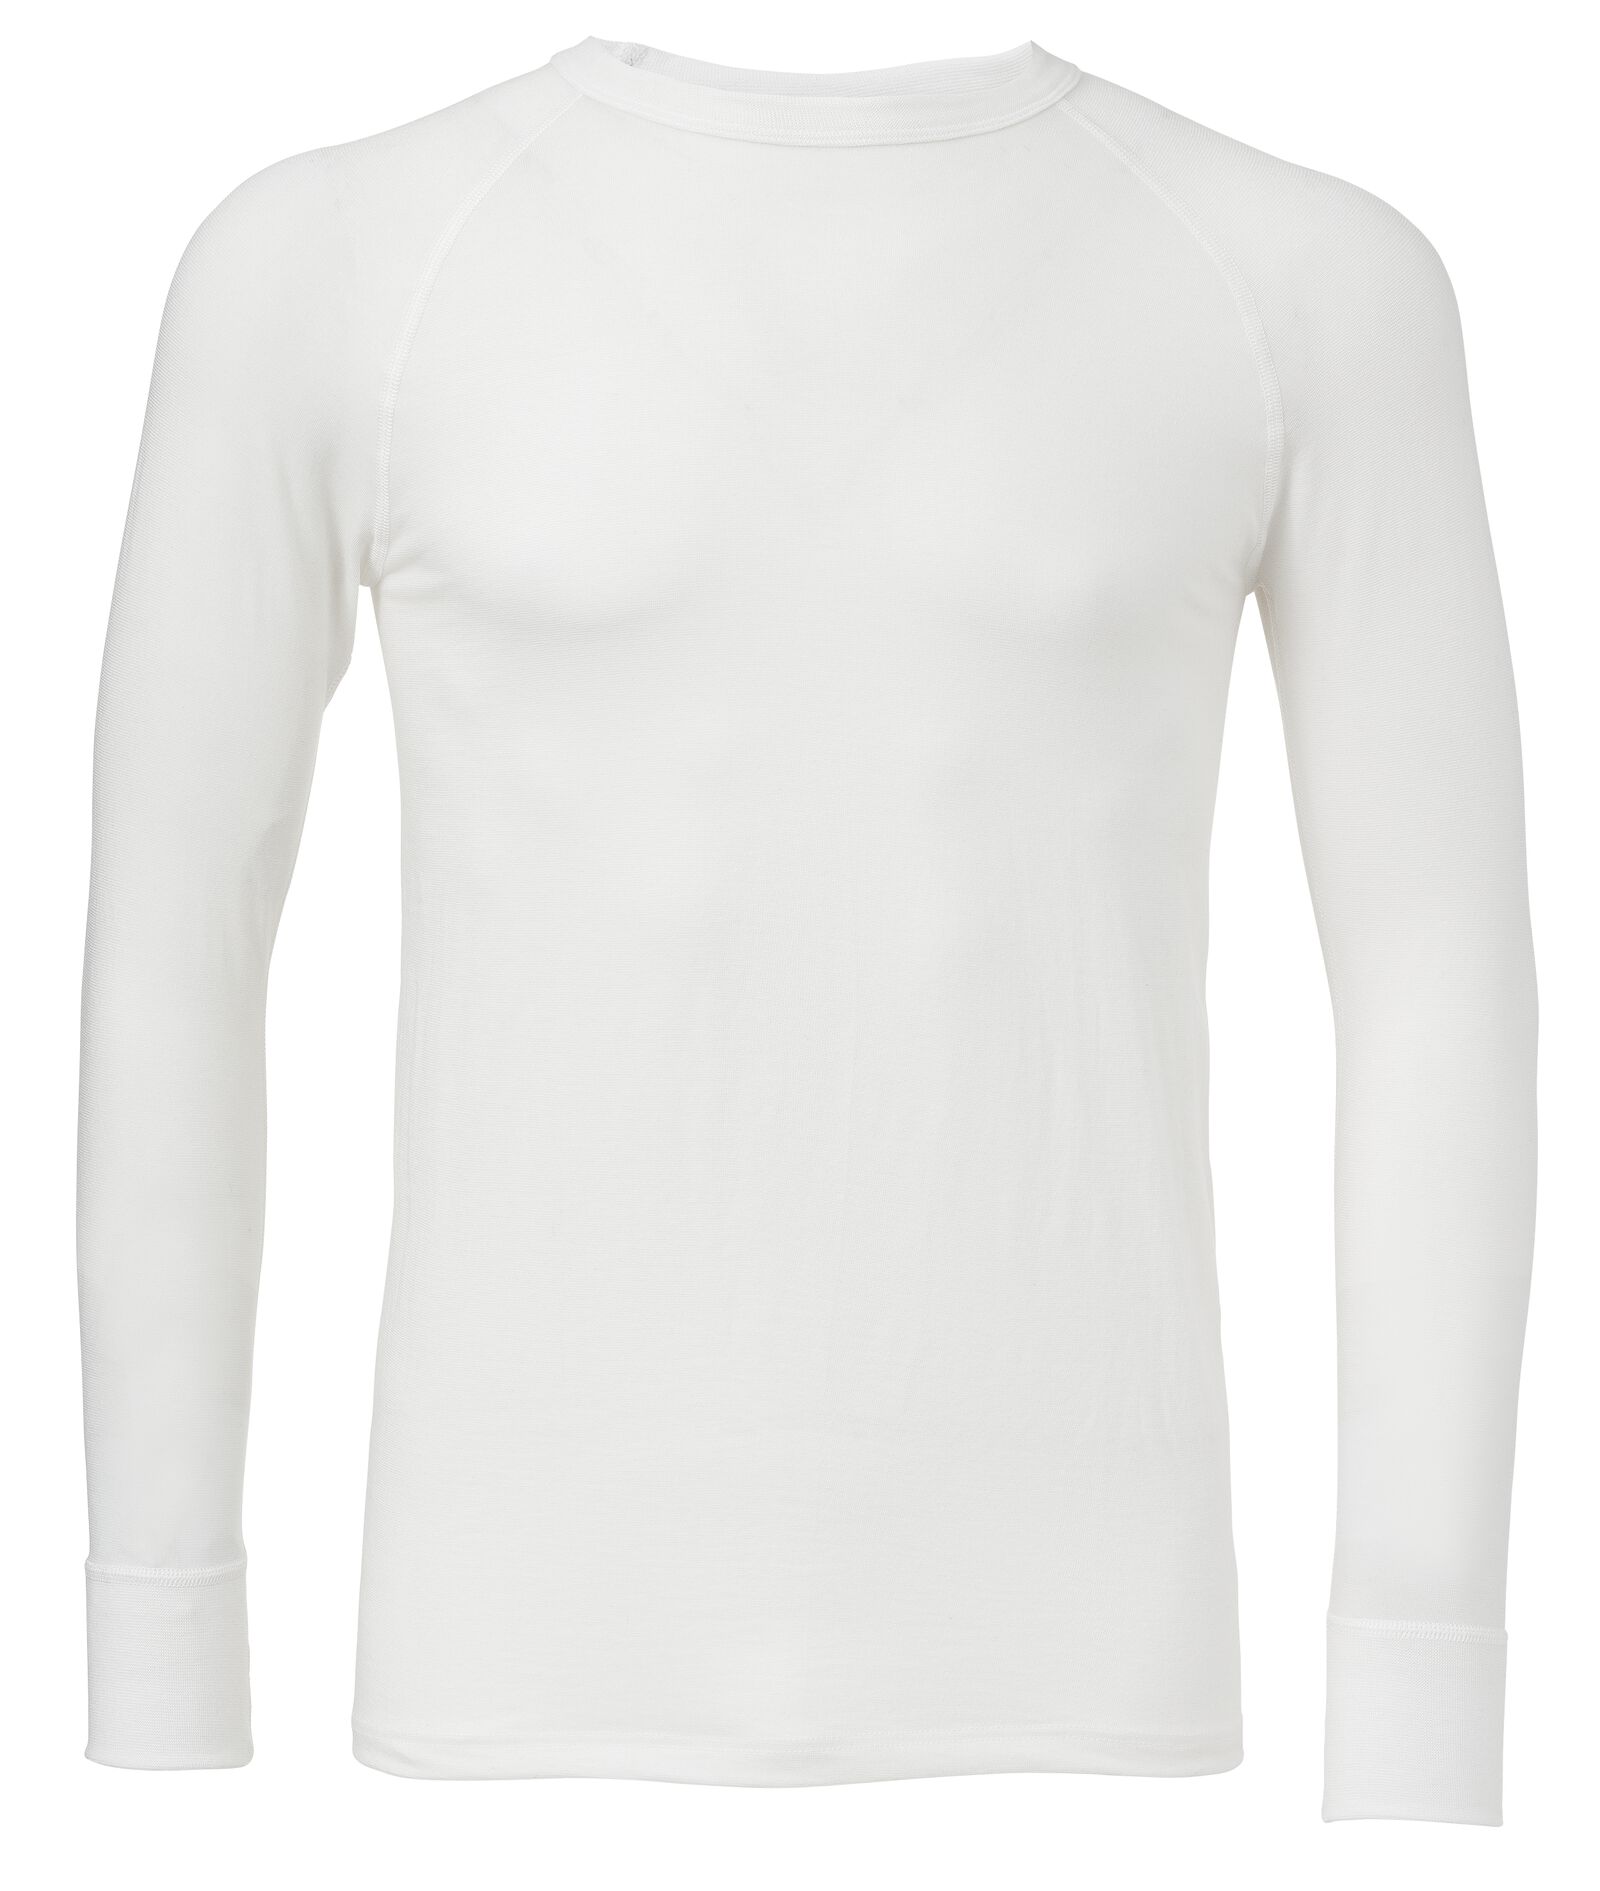 t-shirt thermique homme blanc - HEMA